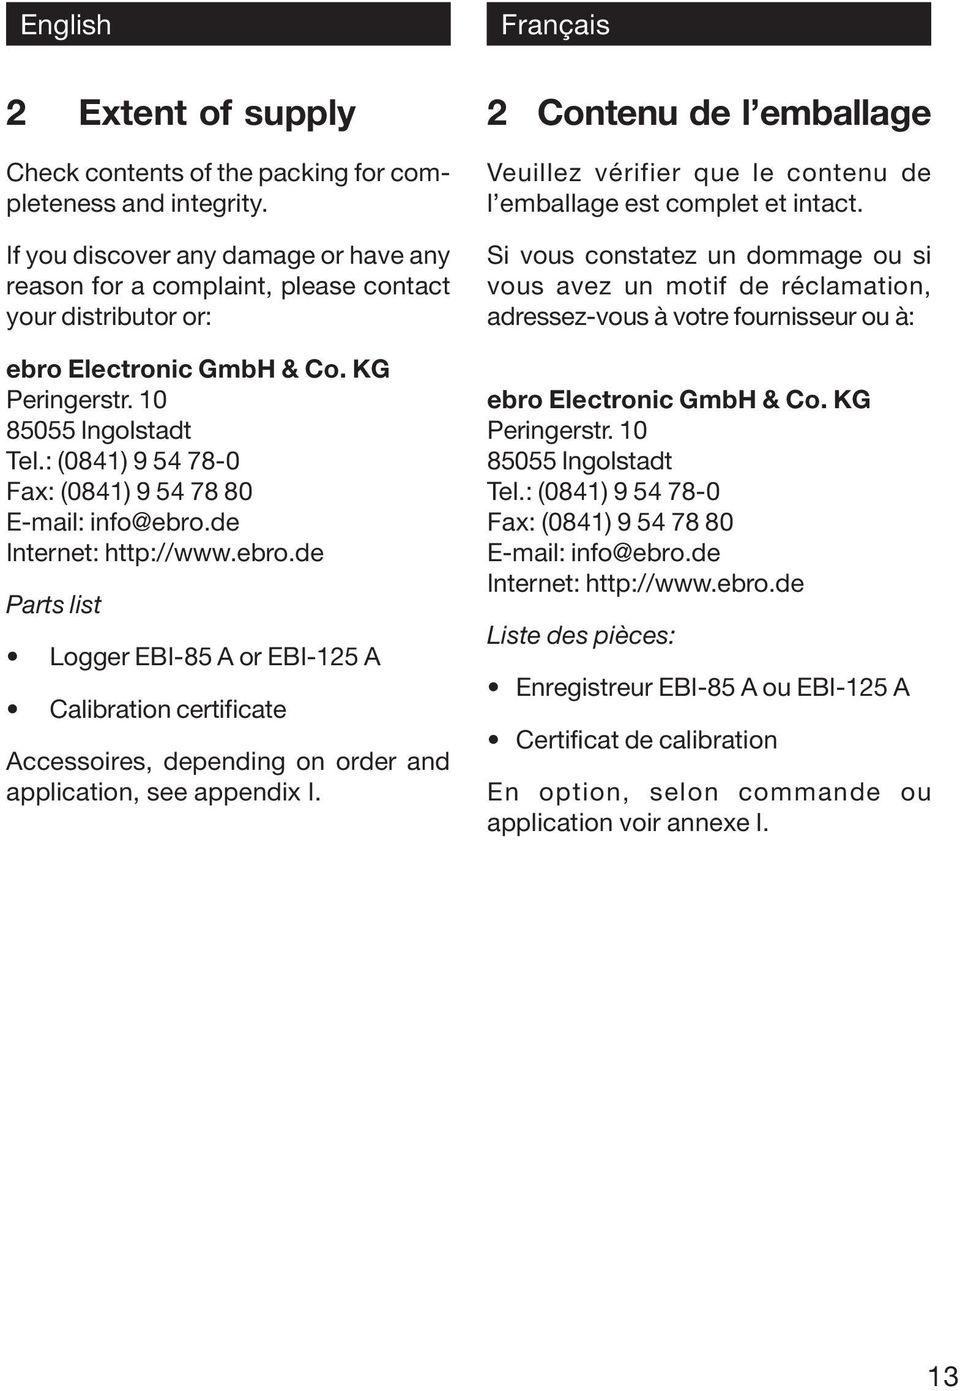 : (0841) 9 54 78-0 Fax: (0841) 9 54 78 80 E-mail: info@ebro.de Internet: http://www.ebro.de Parts list Logger EBI-85 A or EBI-125 A Calibration certificate Accessoires, depending on order and application, see appendix I.